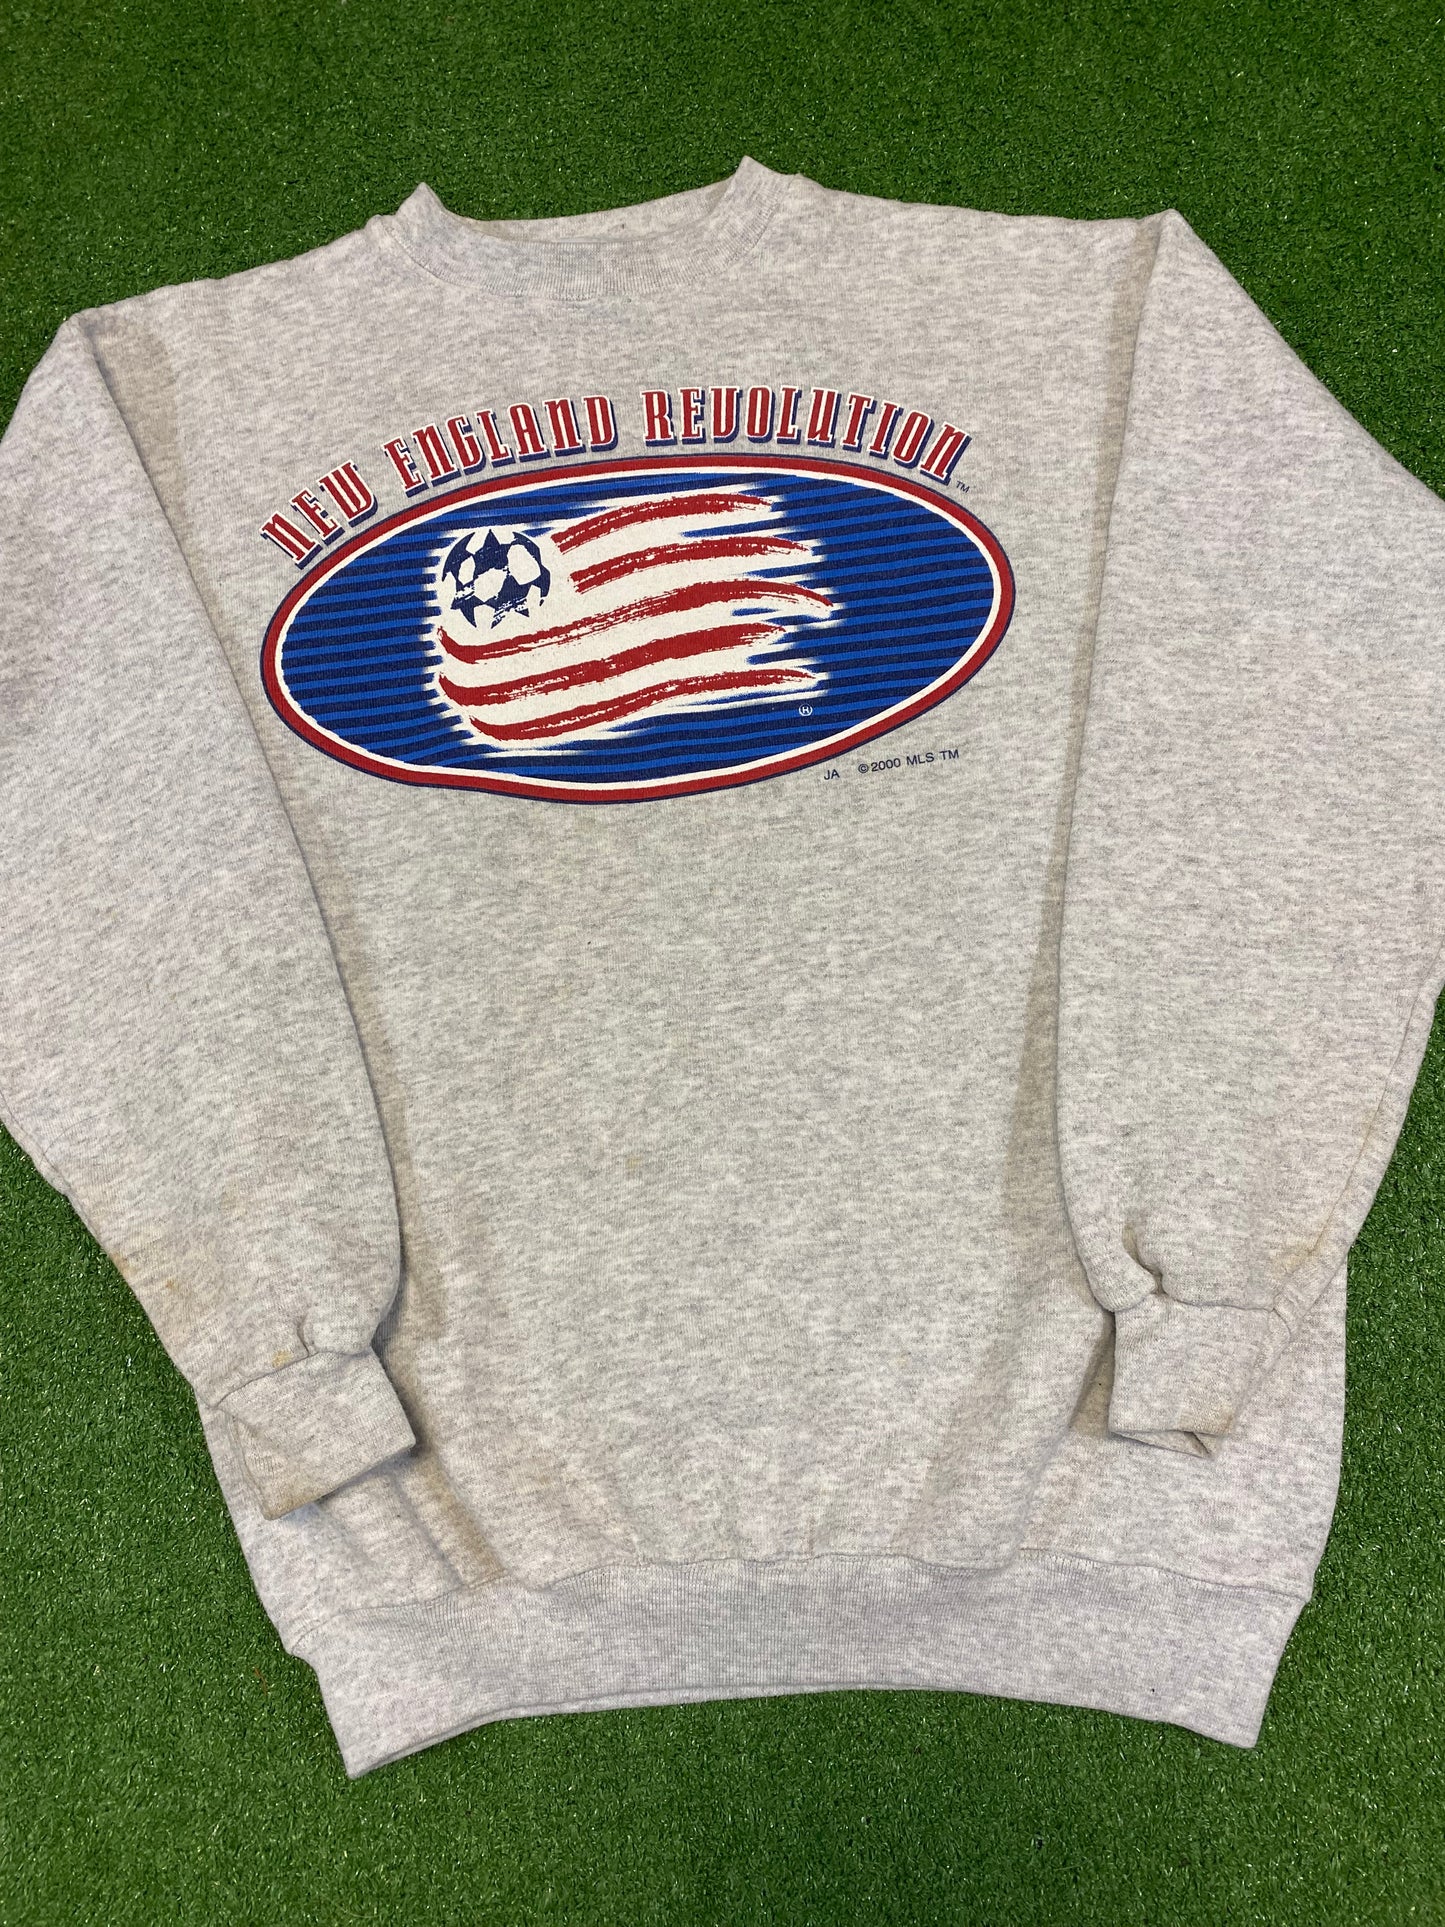 2000 New England Revolution MLS Sweatshirt M